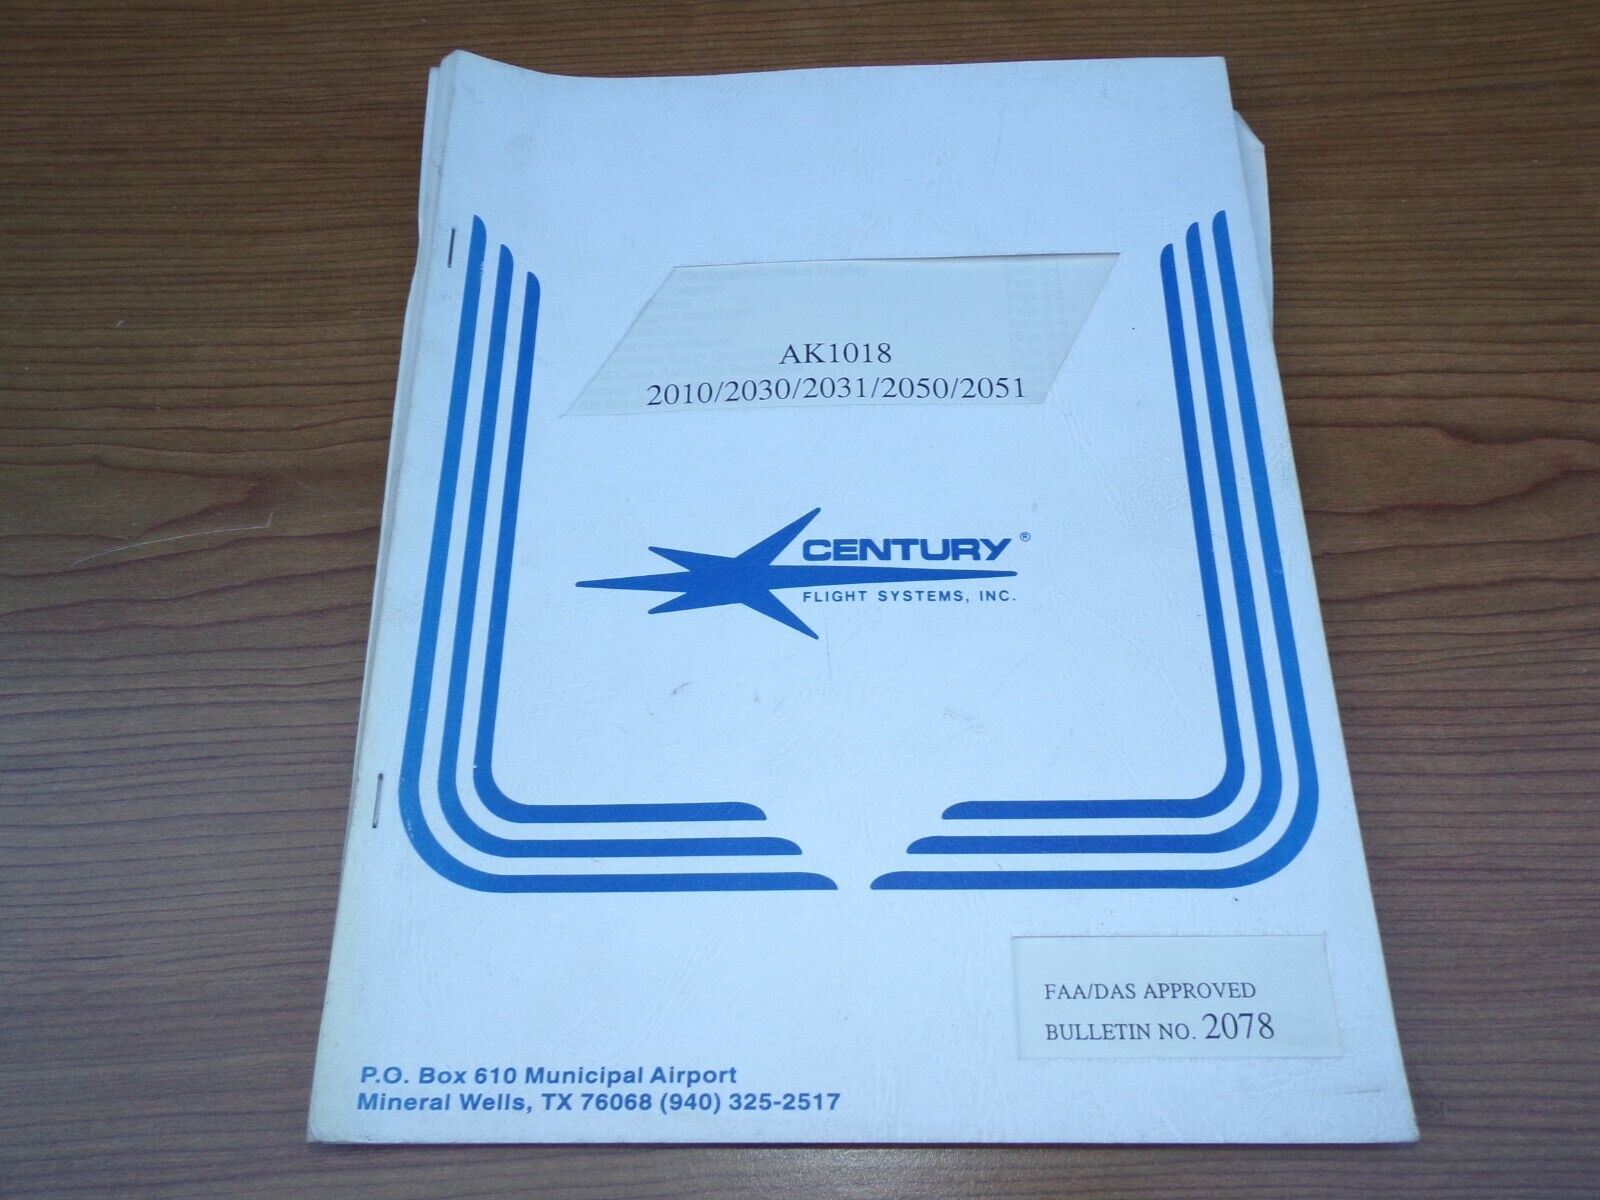 Century Flight Systems AK1018 Manual Bulletin No 2078